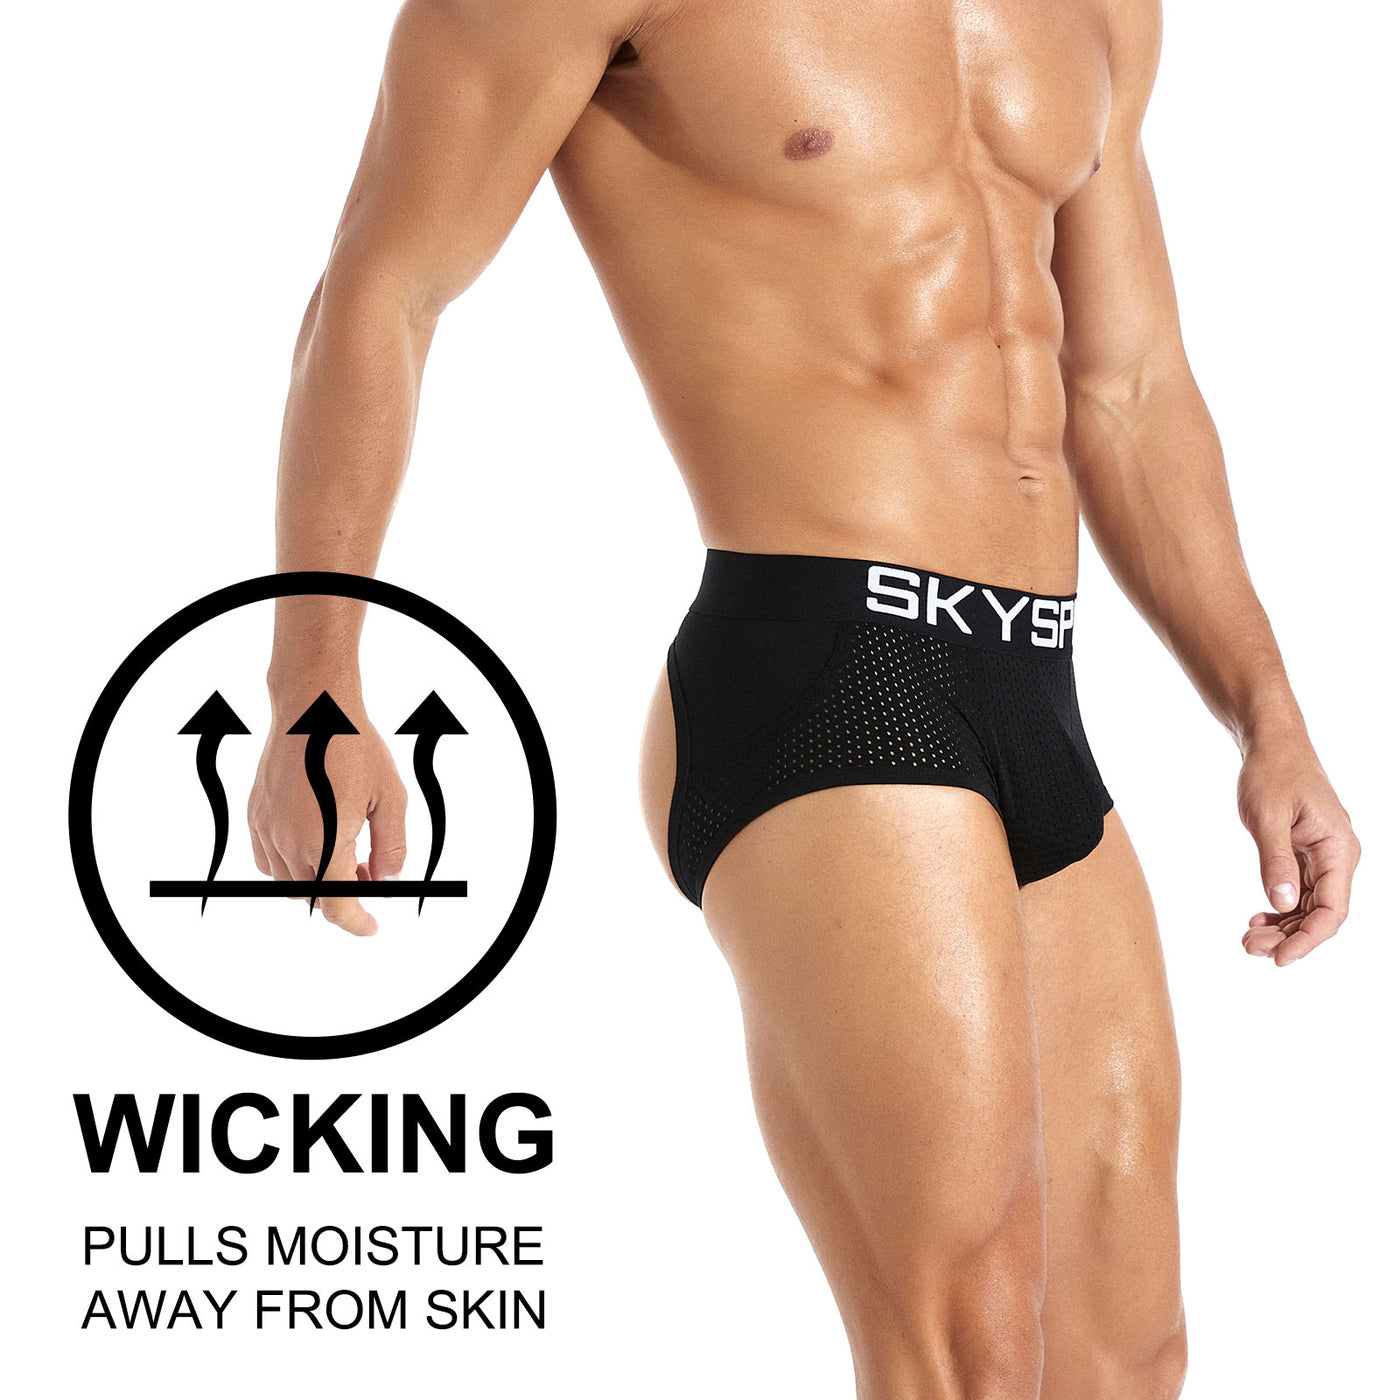 SKYSPER SG19 - Men's Jockstrap Cotton & Mesh Underwear Athletic Supporter